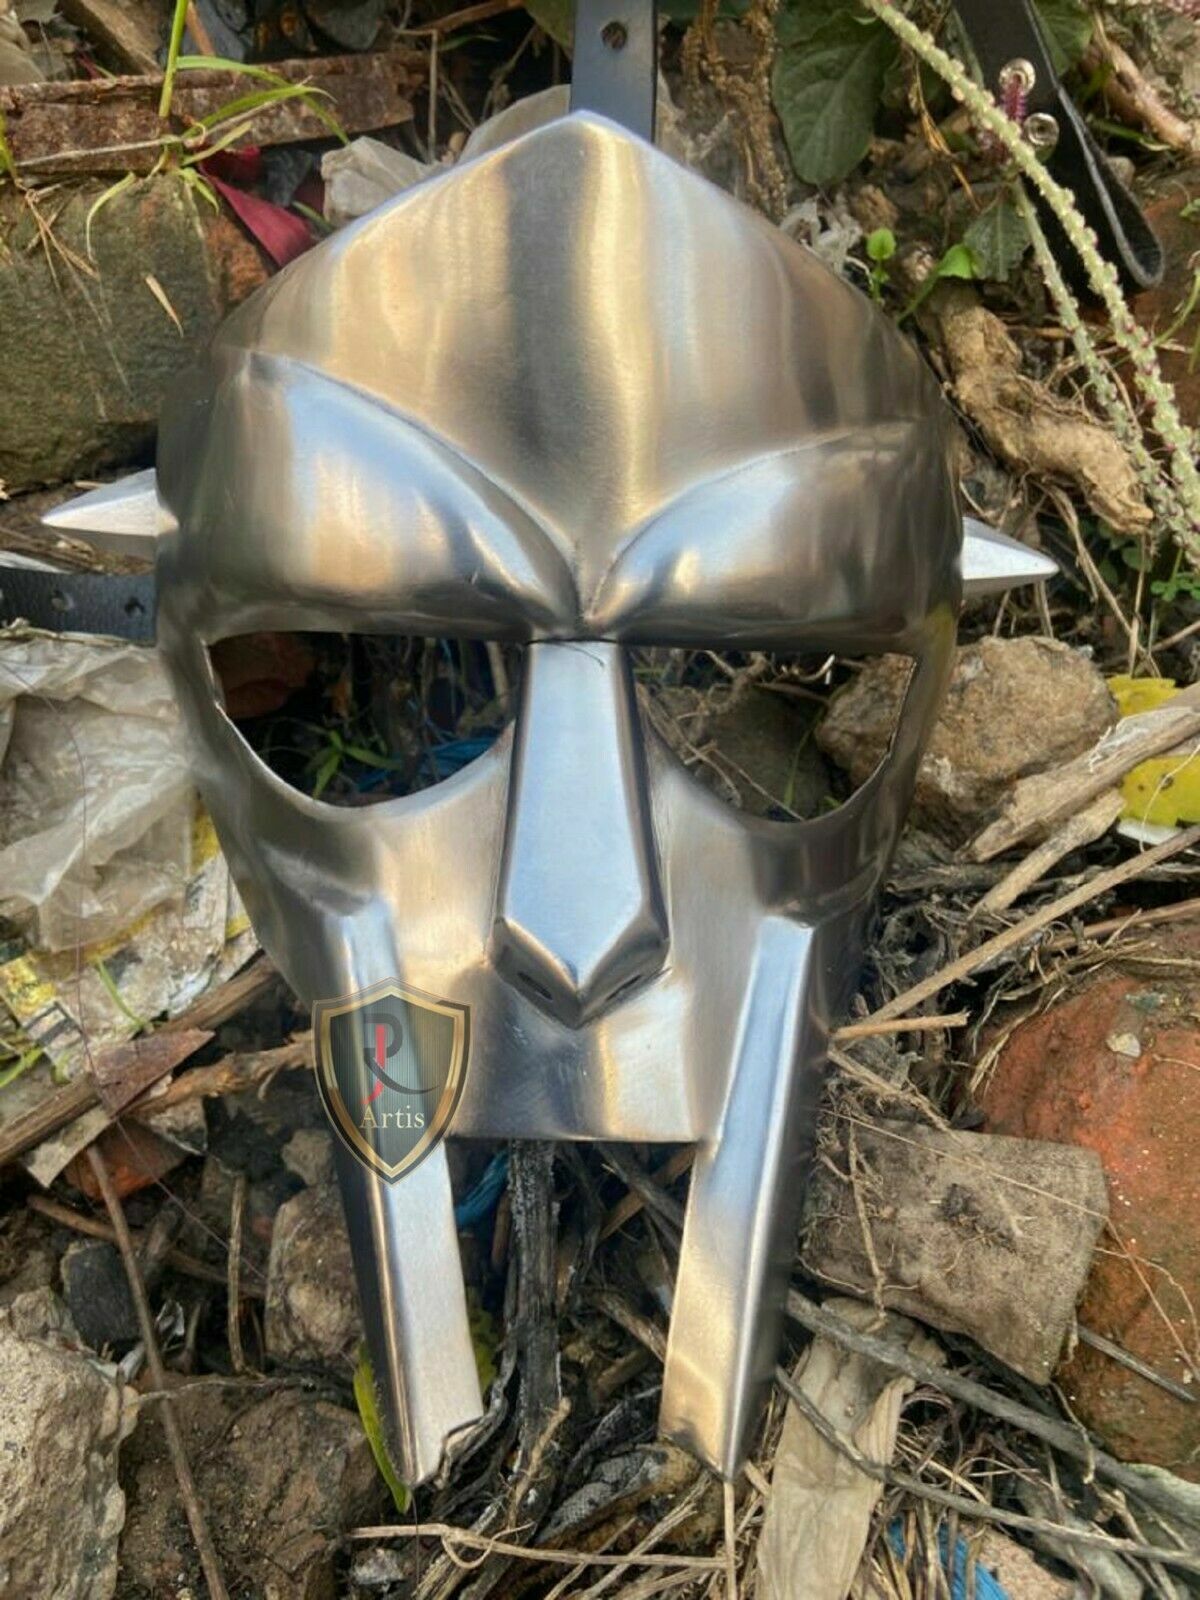 Rj.Artis MF Doom Mask Hand-Forged Sca Larp Gladiator MF Doom Rapper Madvillain